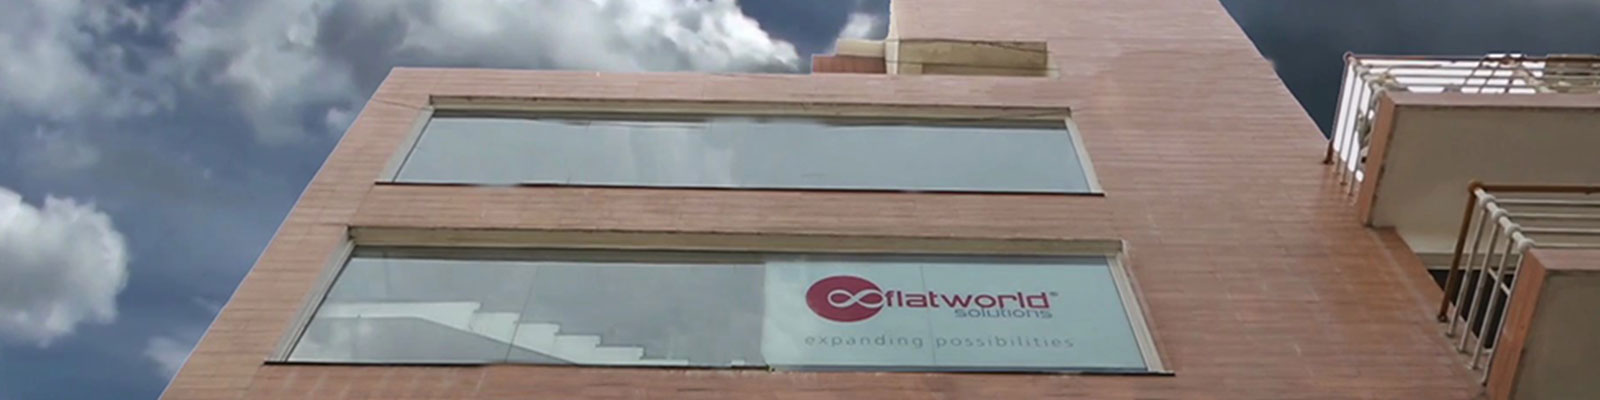 MedBillingExperts - Flatworld Solutions Company